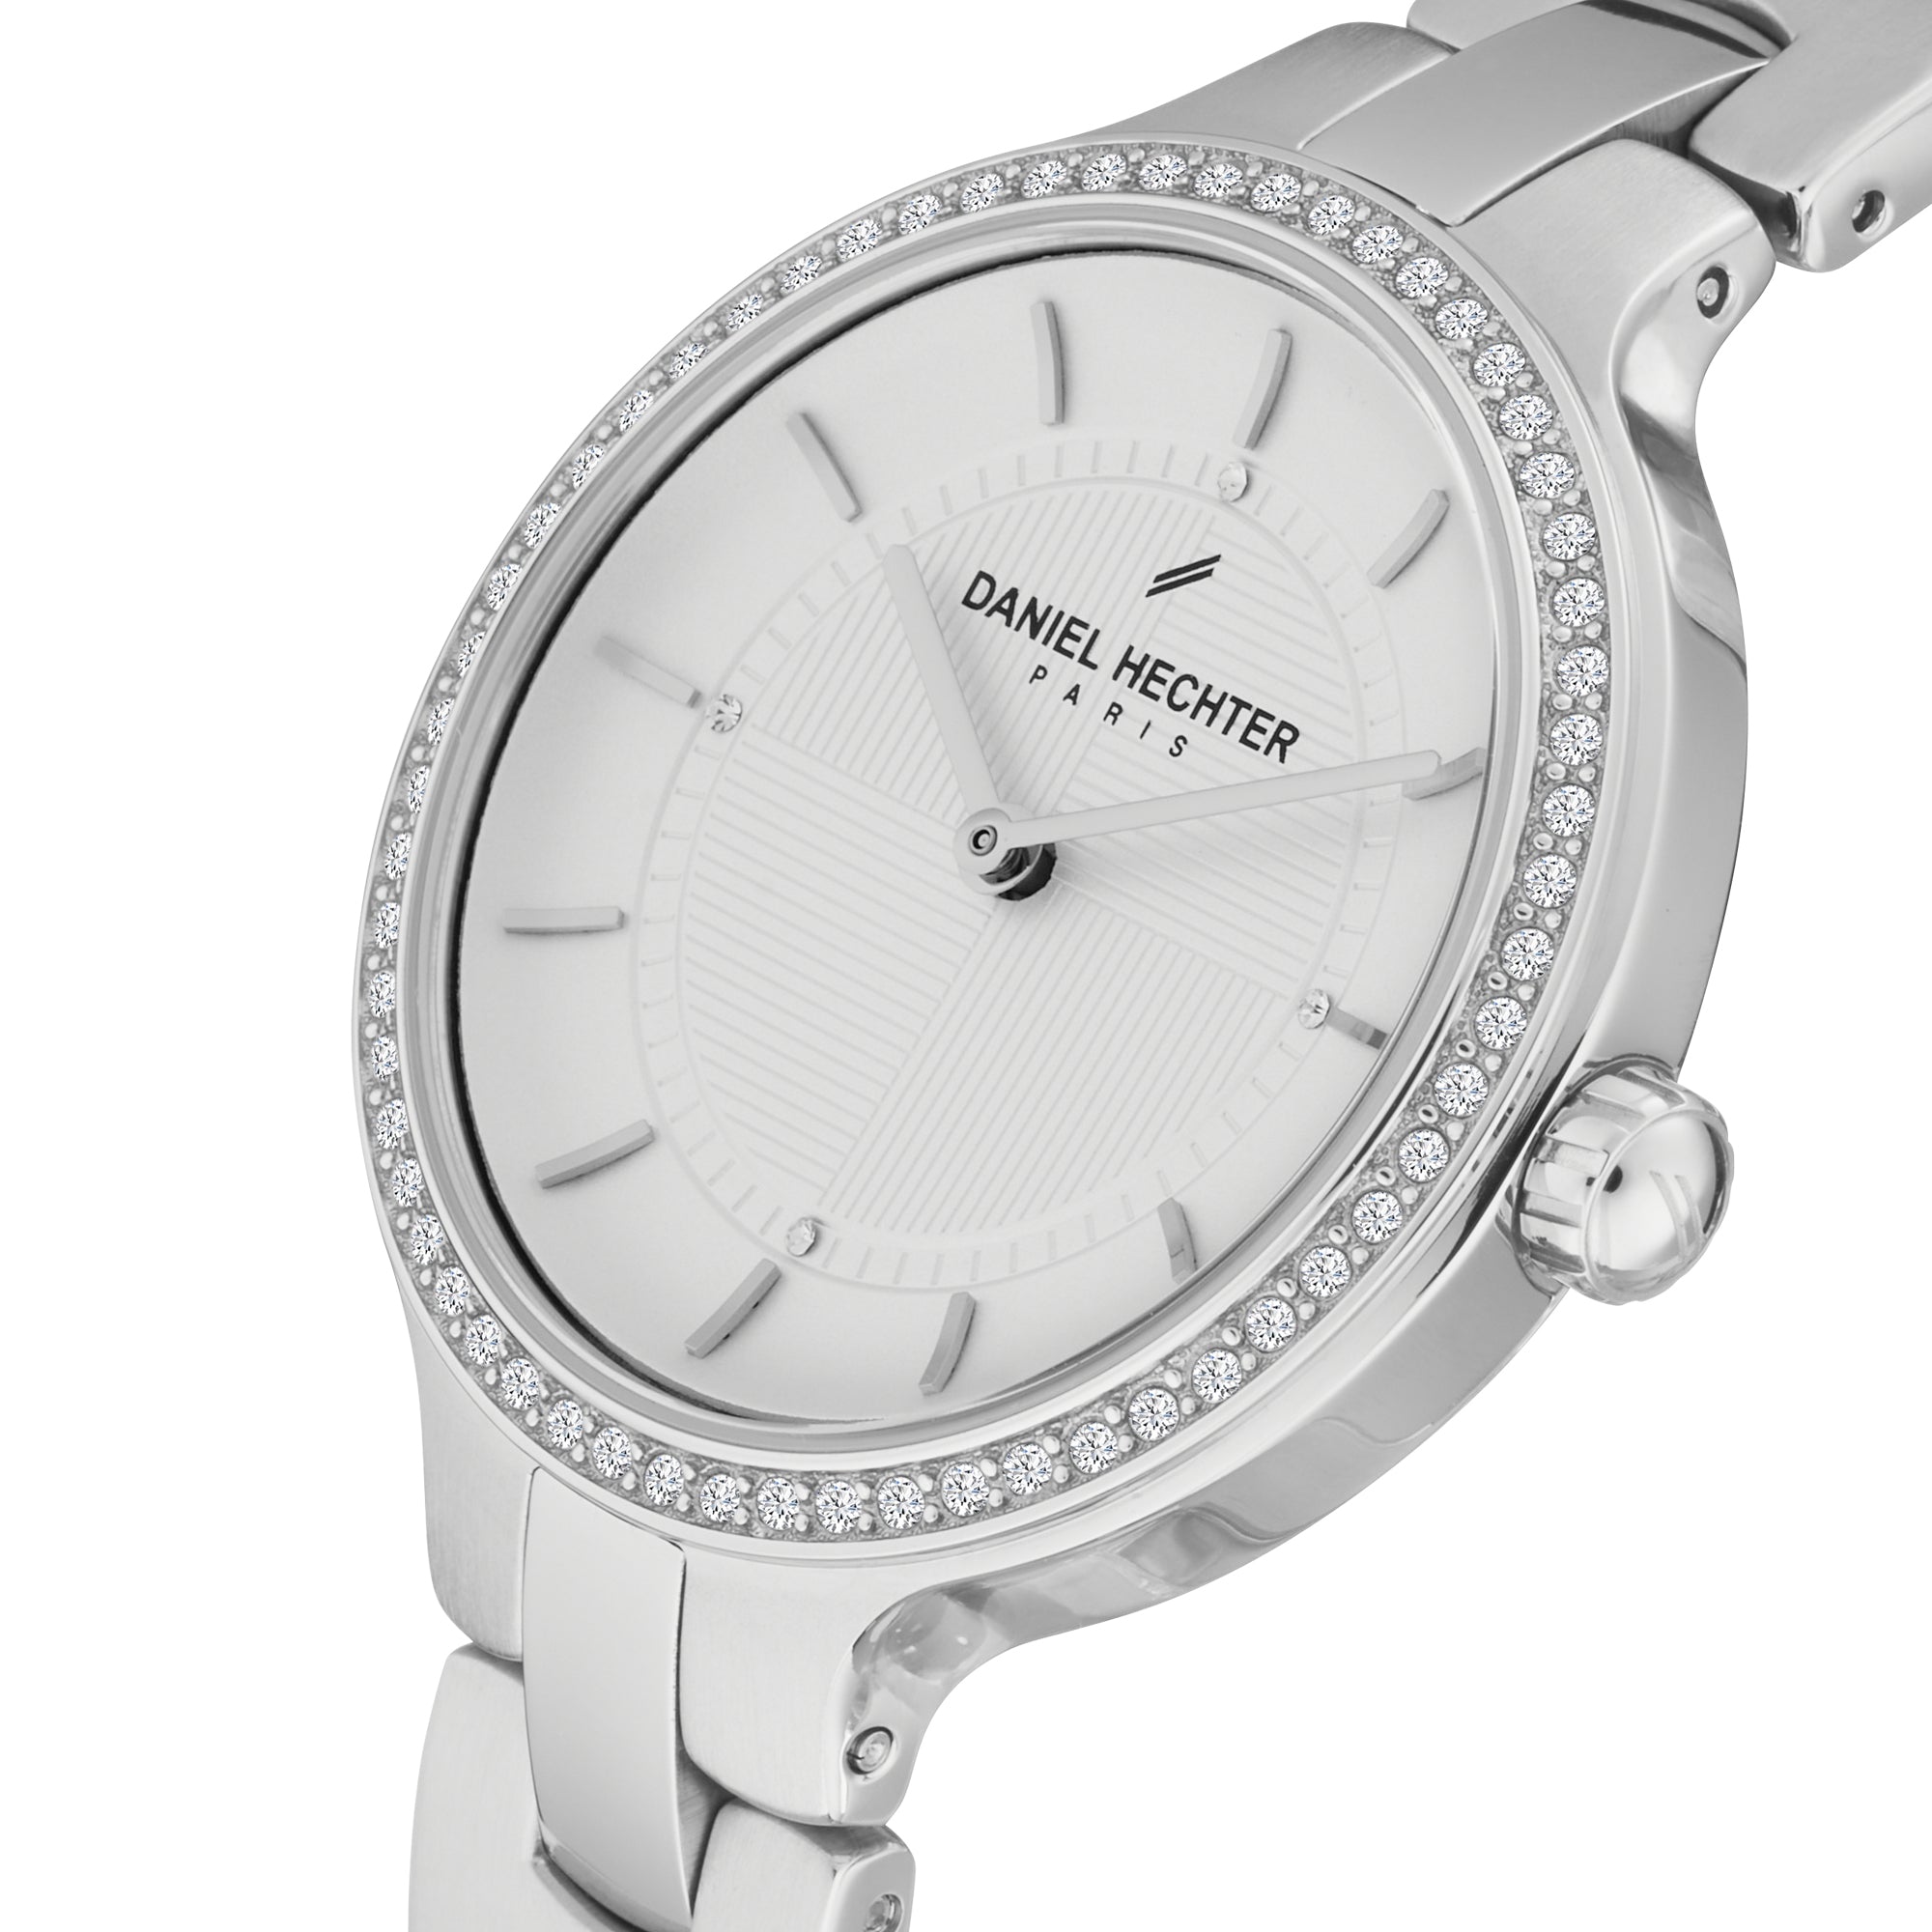 Buy Daniel Hechter Radiant Silver Watch Online